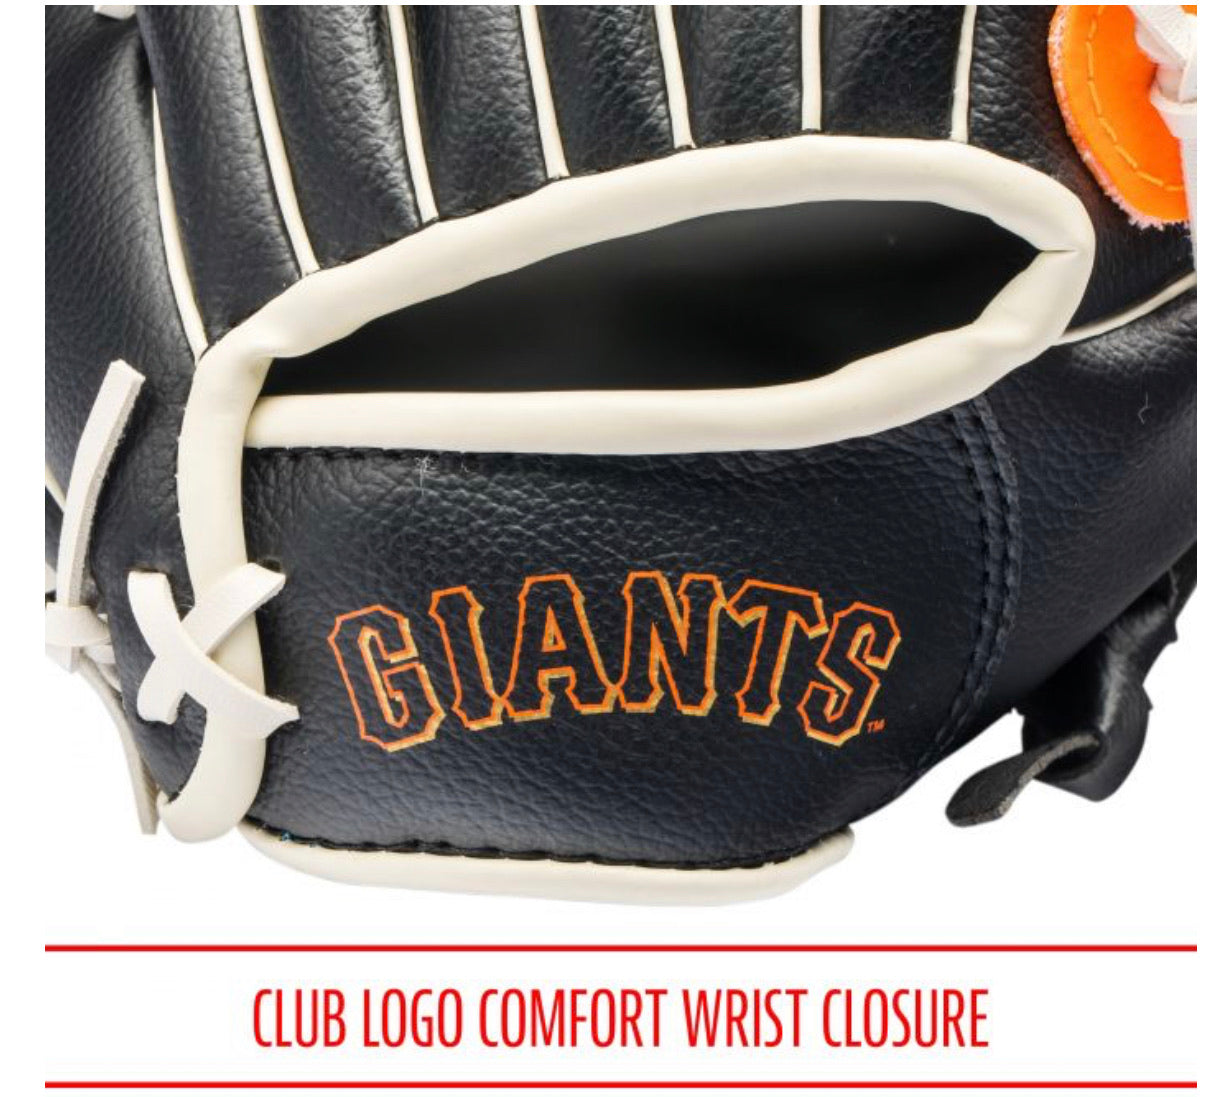 San Francisco Giants MLB® Team Glove and Ball Set - AtlanticCoastSports